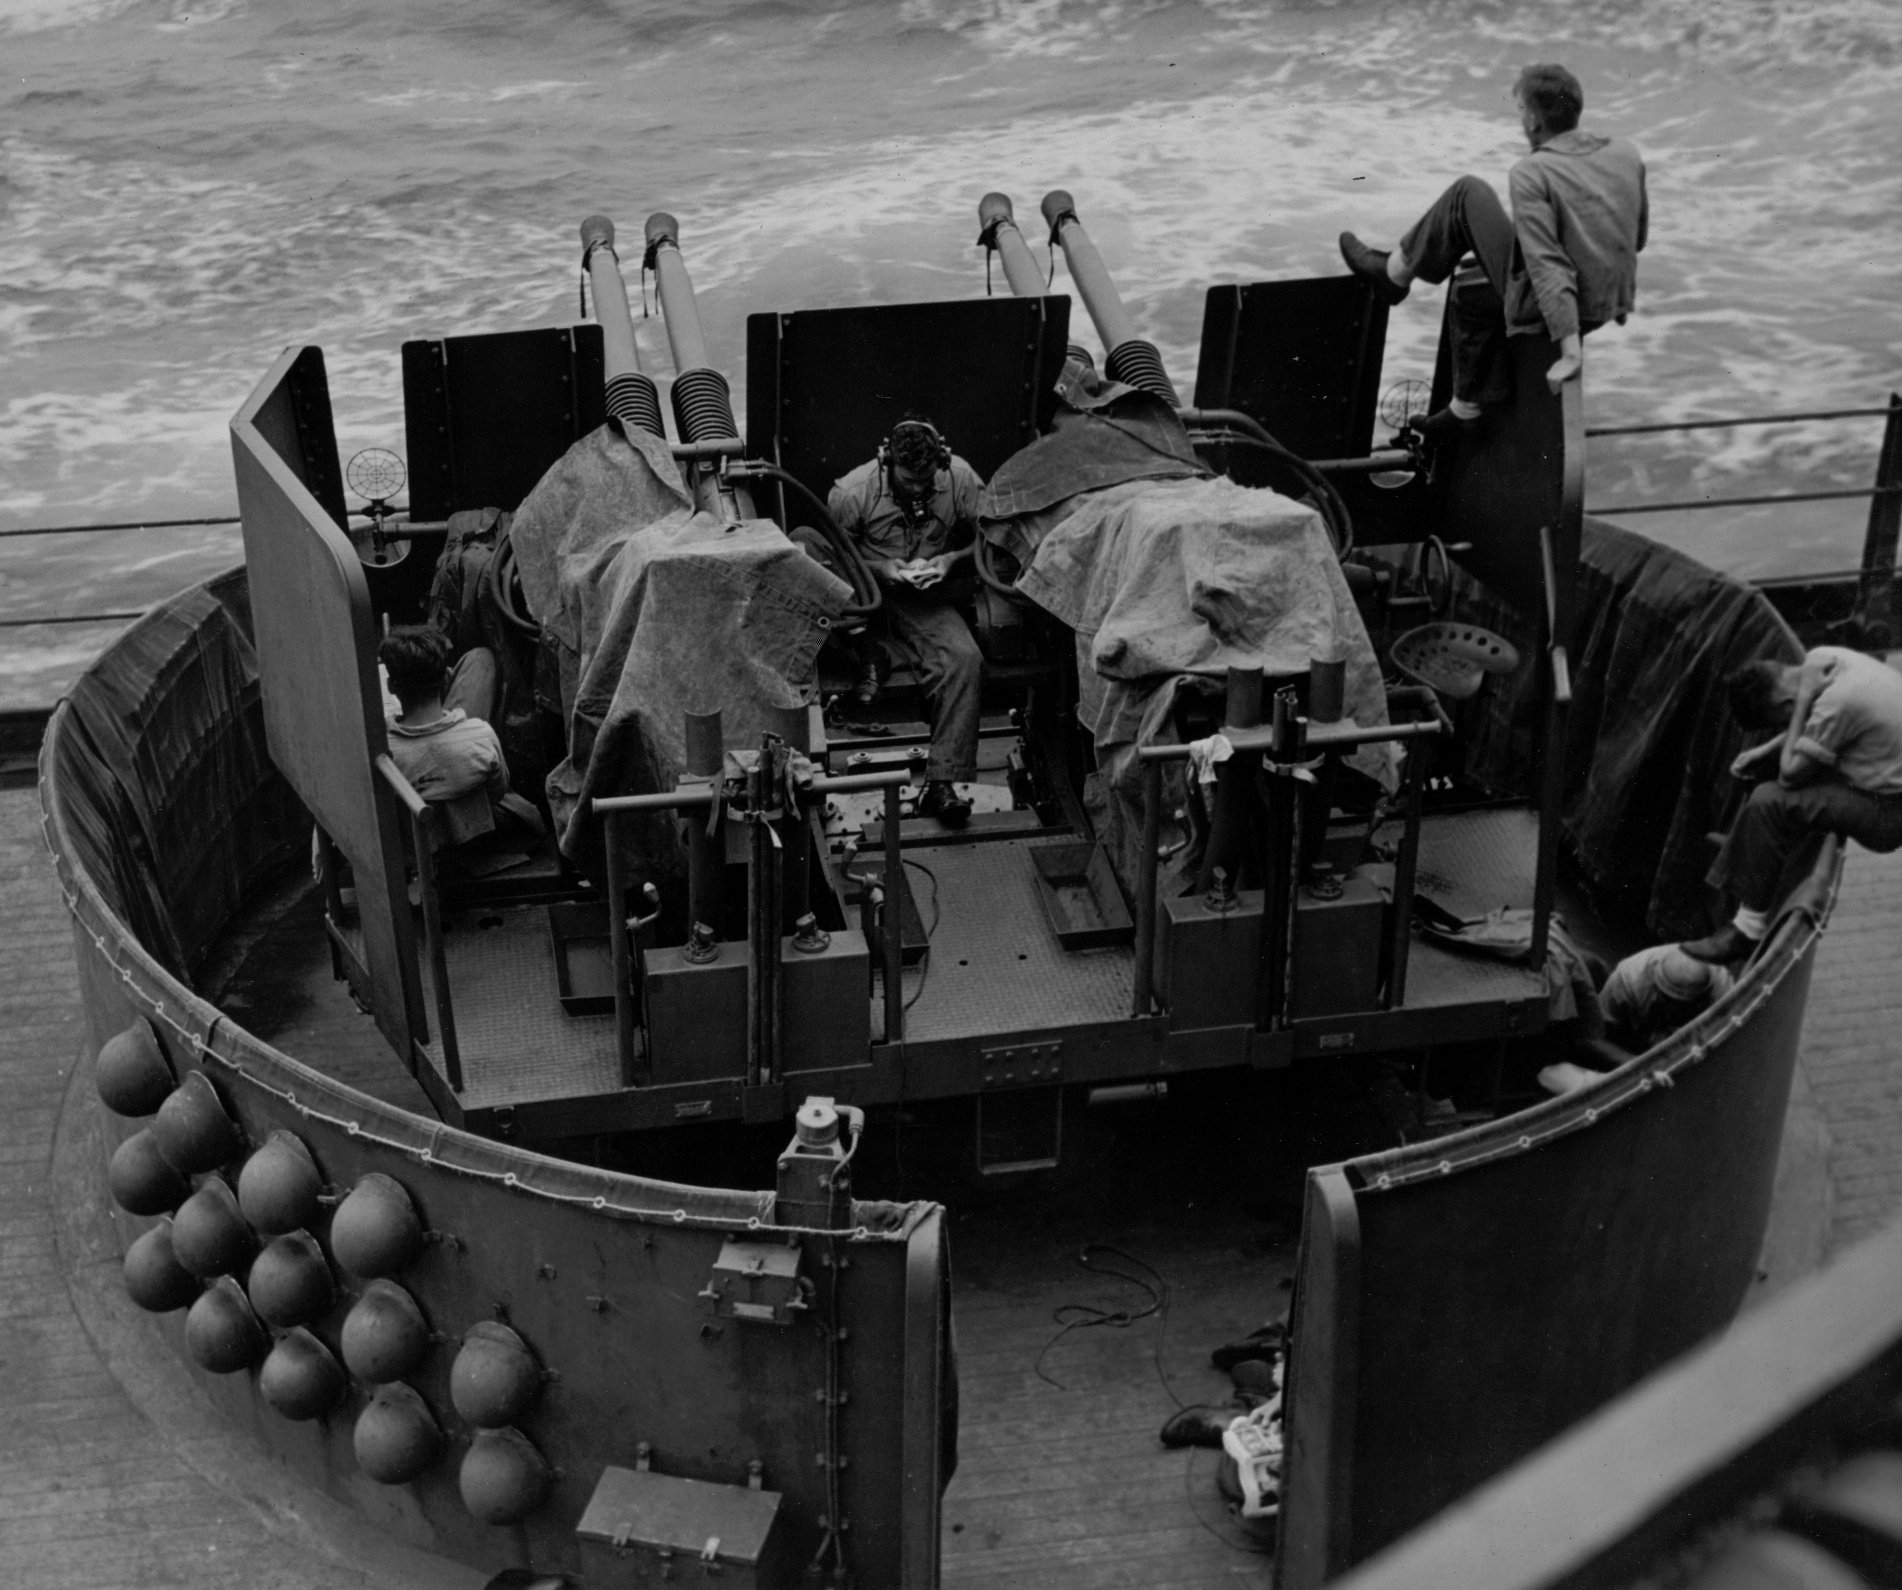 40mm Bofors position aboard USS New Jersey at sea, Pacific Ocean, 21 Jul 1943